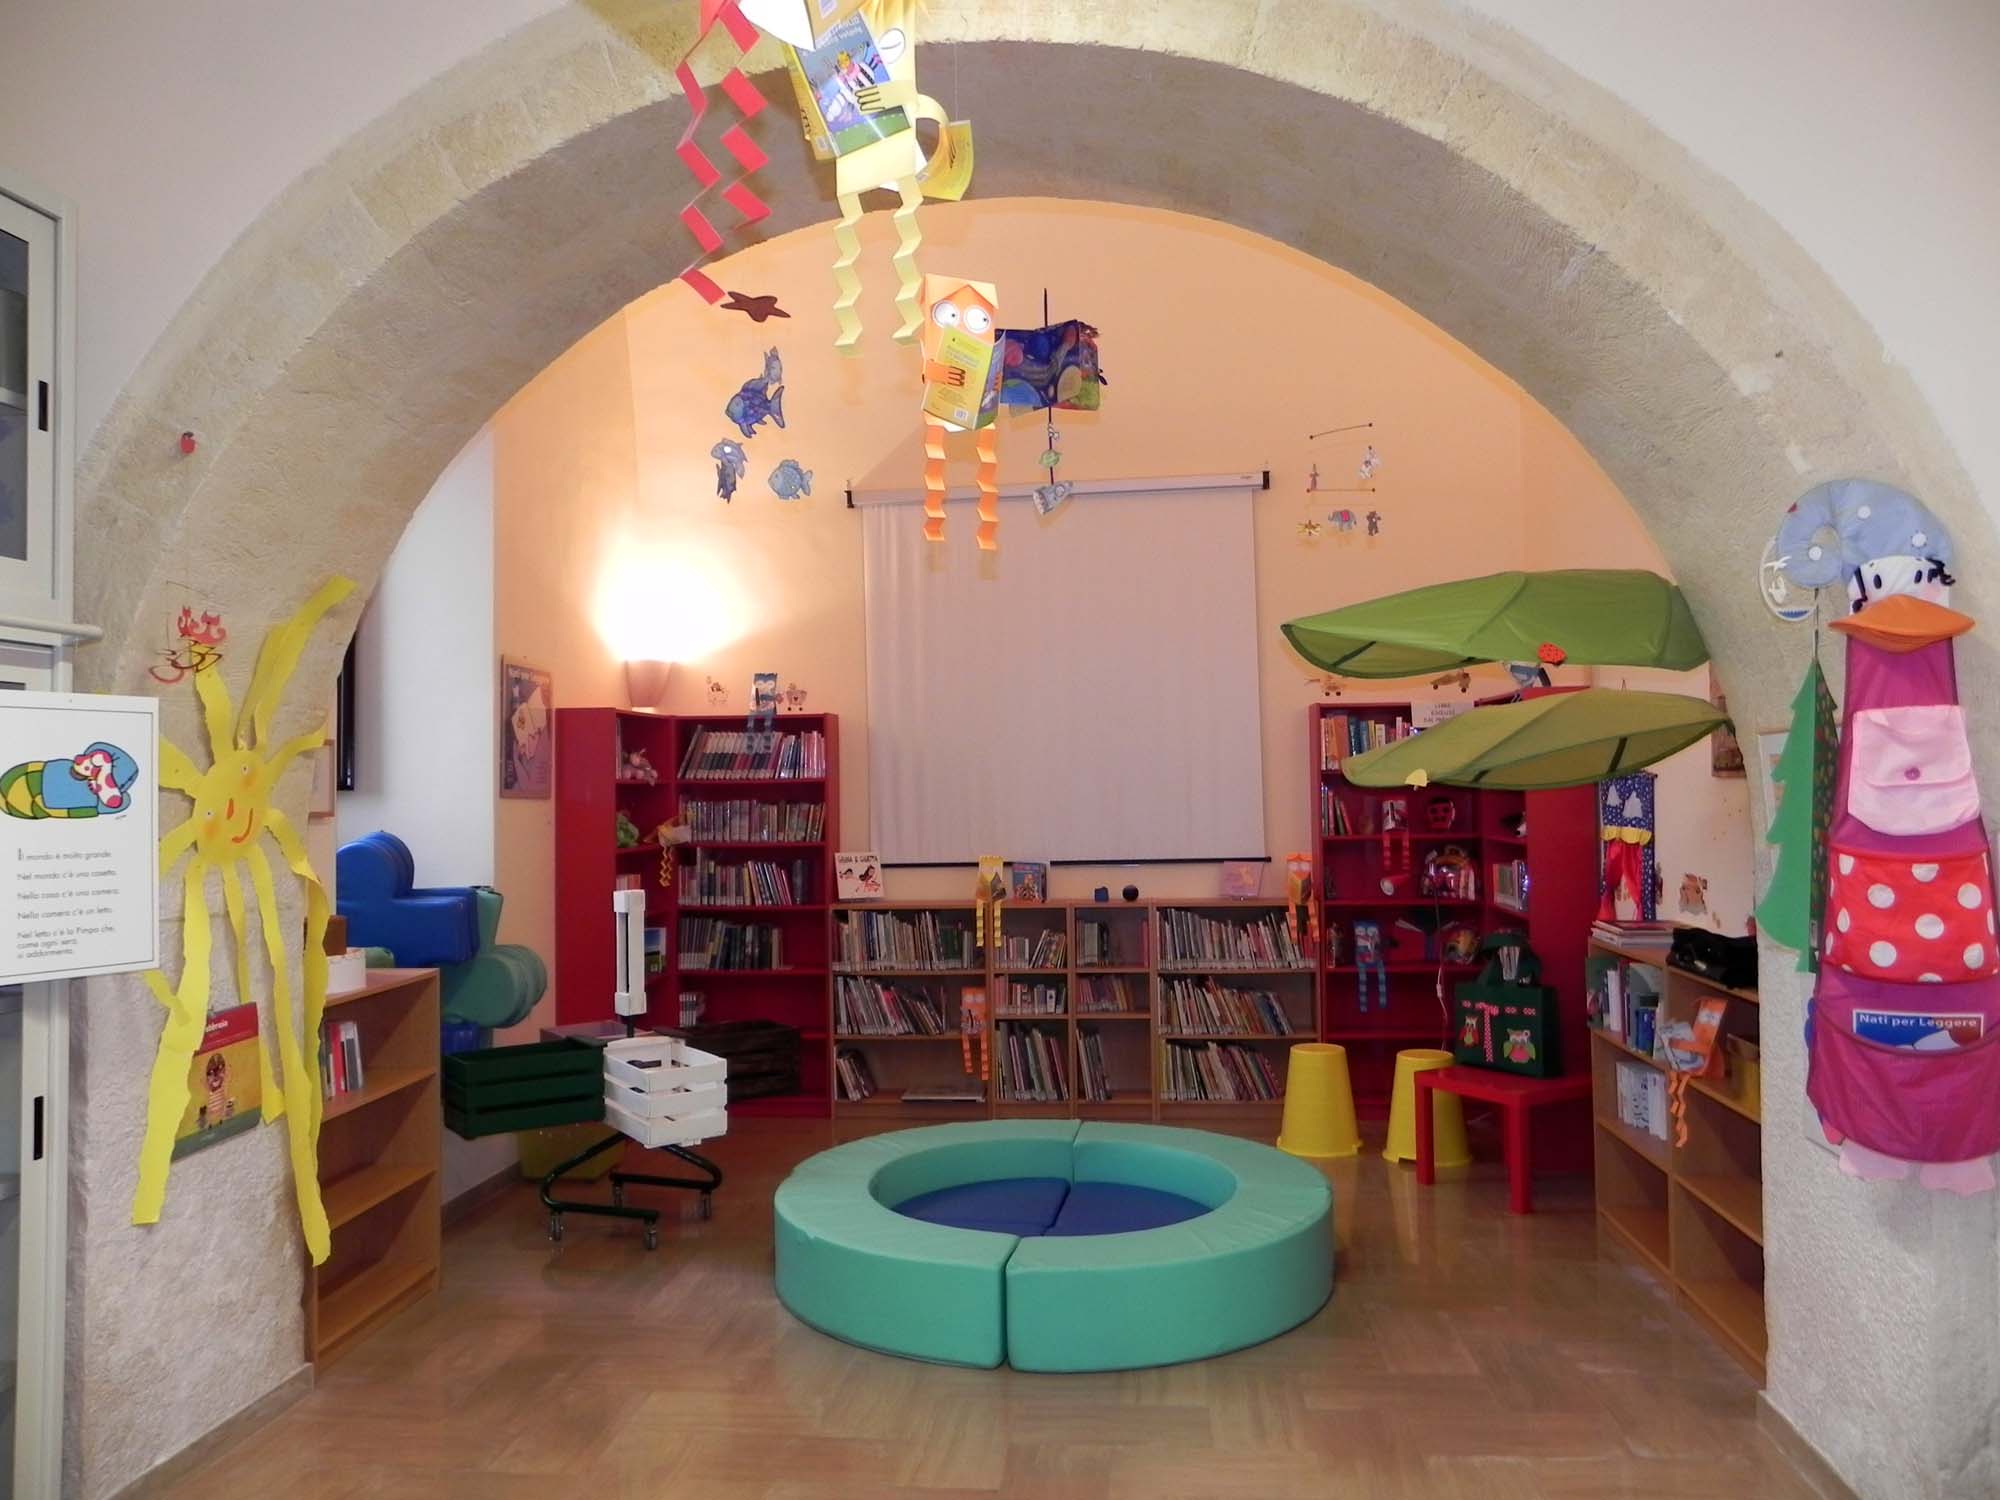 Biblioteca diocesana "S. Tommaso D'Aquino" sala di lettura: zona bimbi